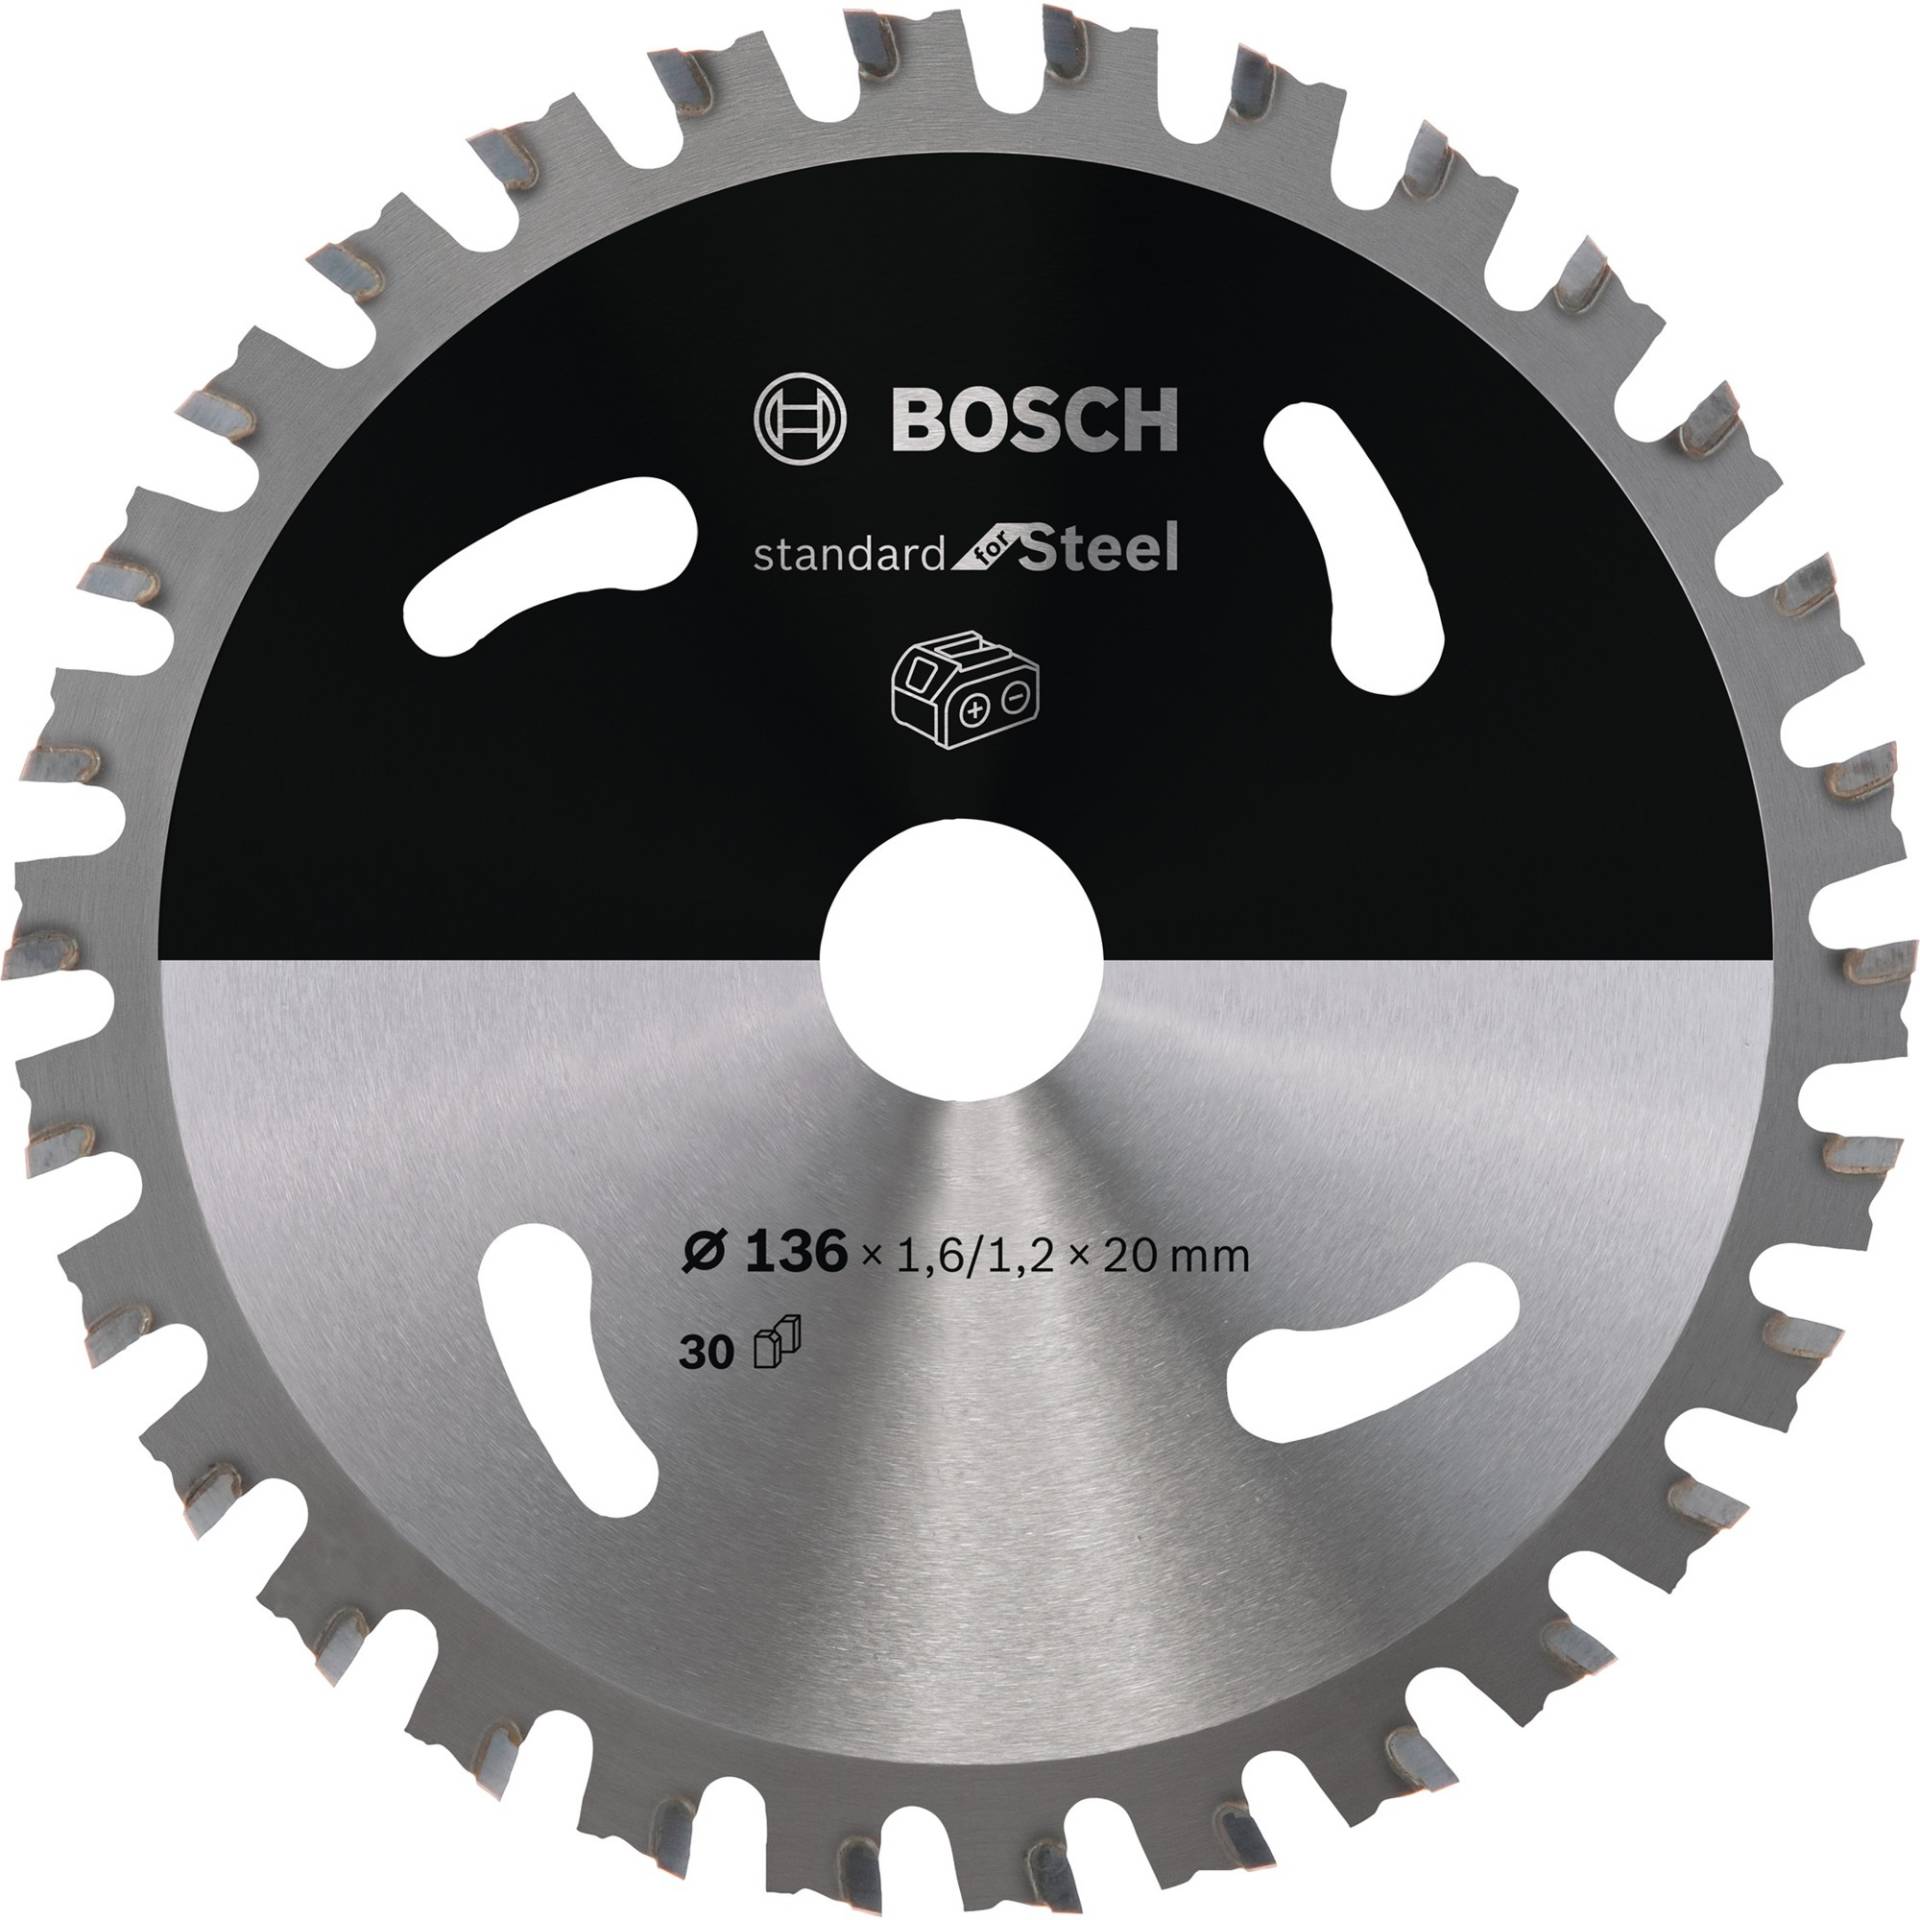 Kreissägeblatt Standard for Steel, Ø 136mm, 30Z von Bosch